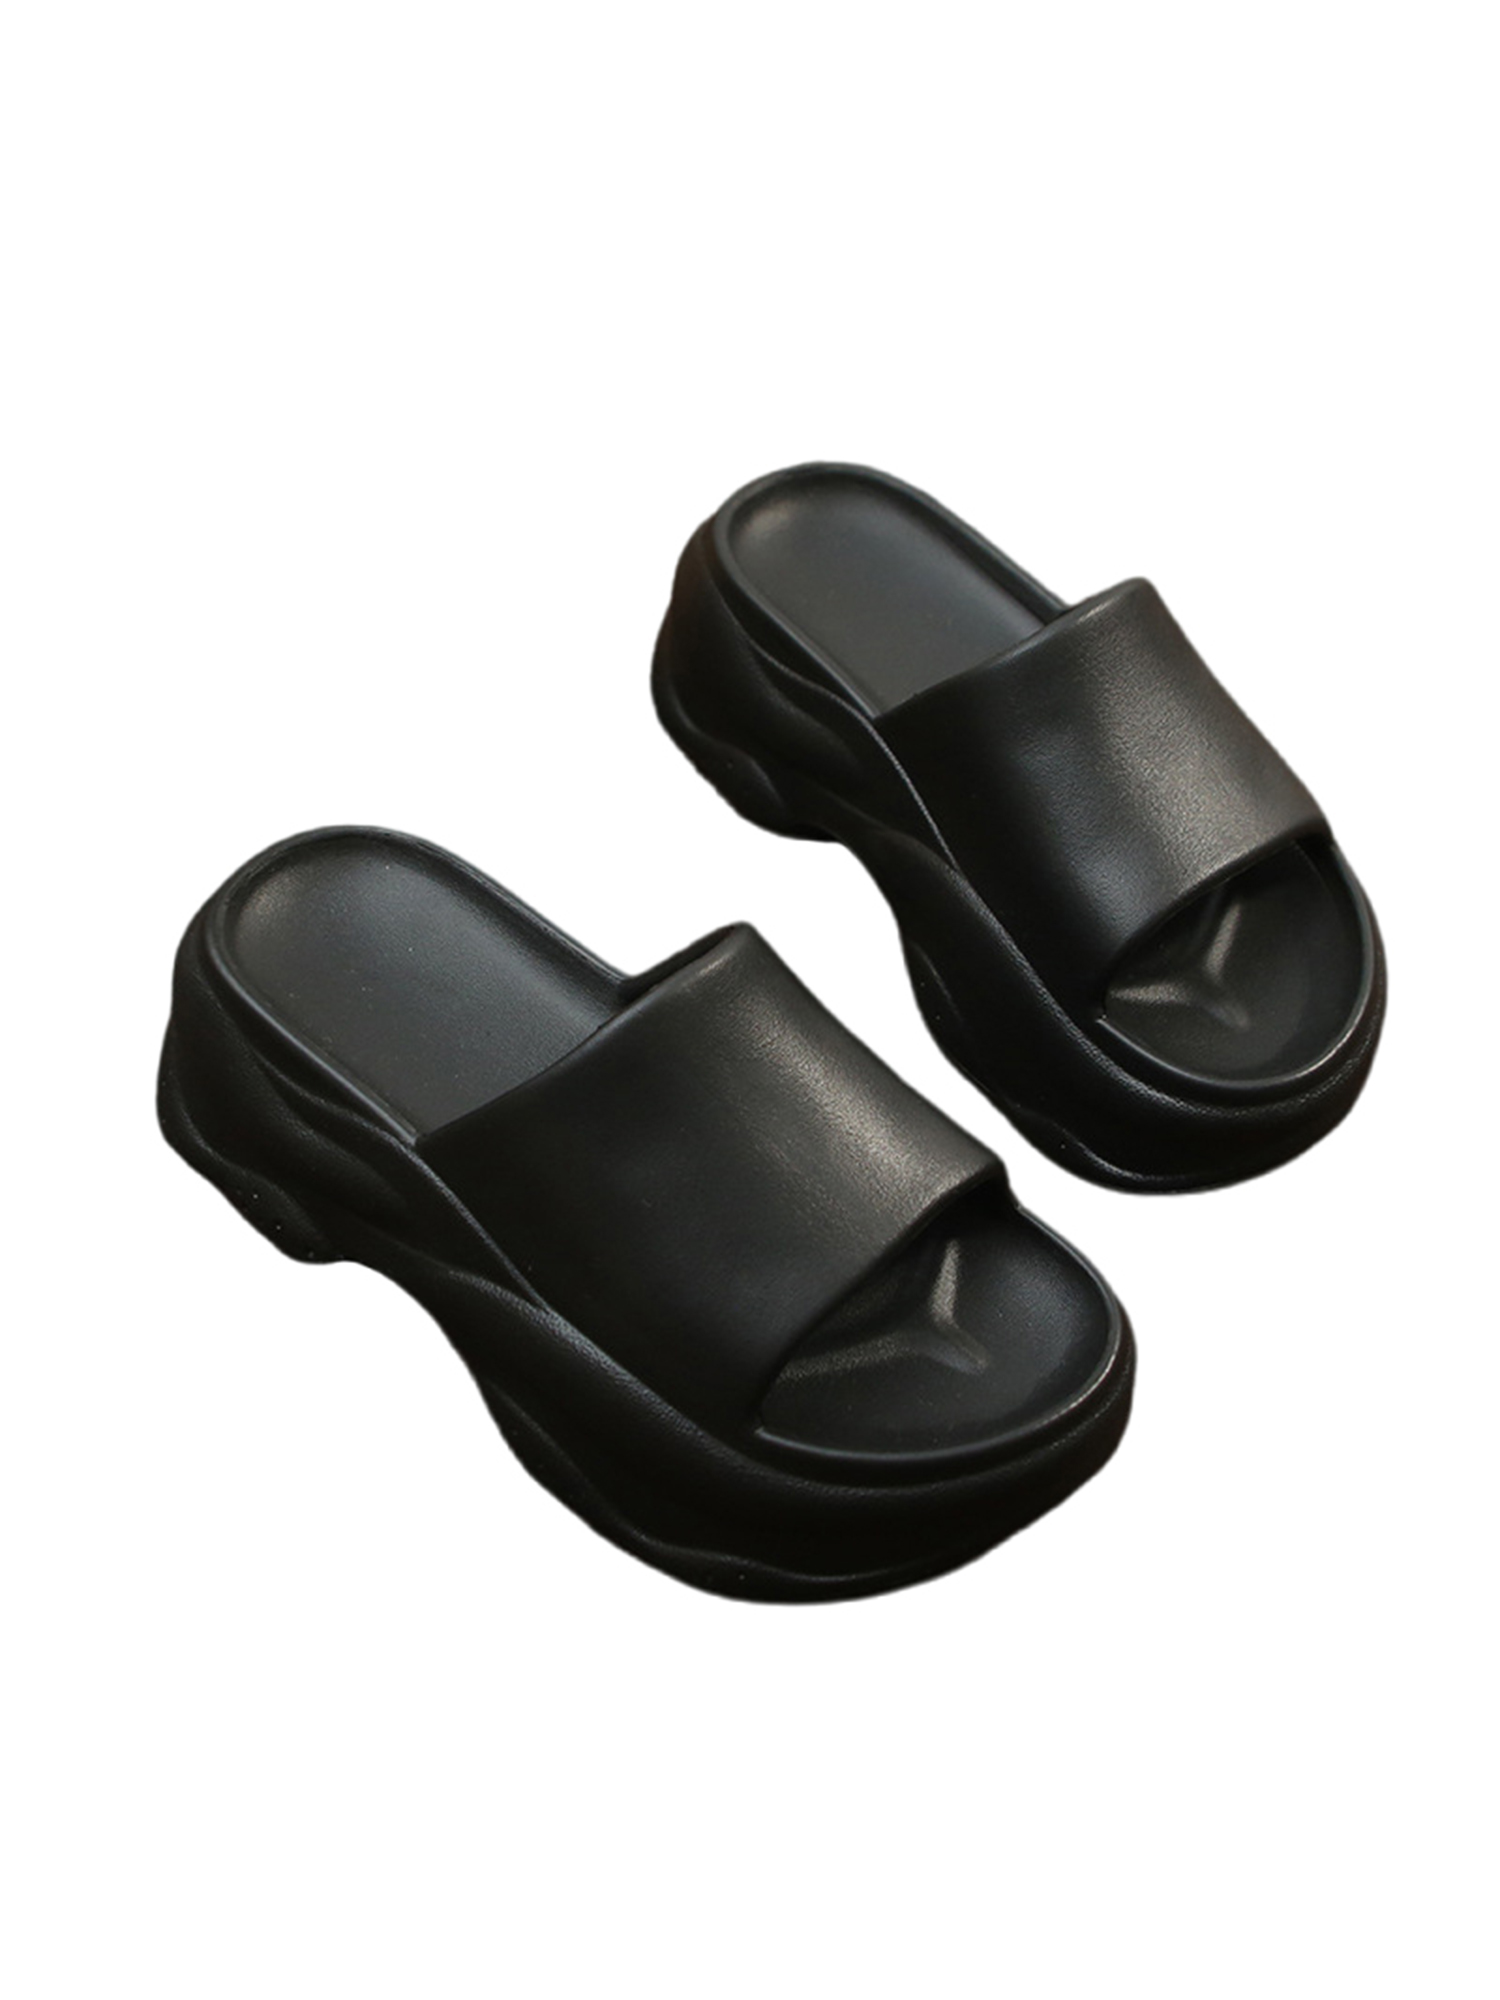 Oucaili Womens Sandals Summer Slides Beach Casual Shoes Non-Slip ...